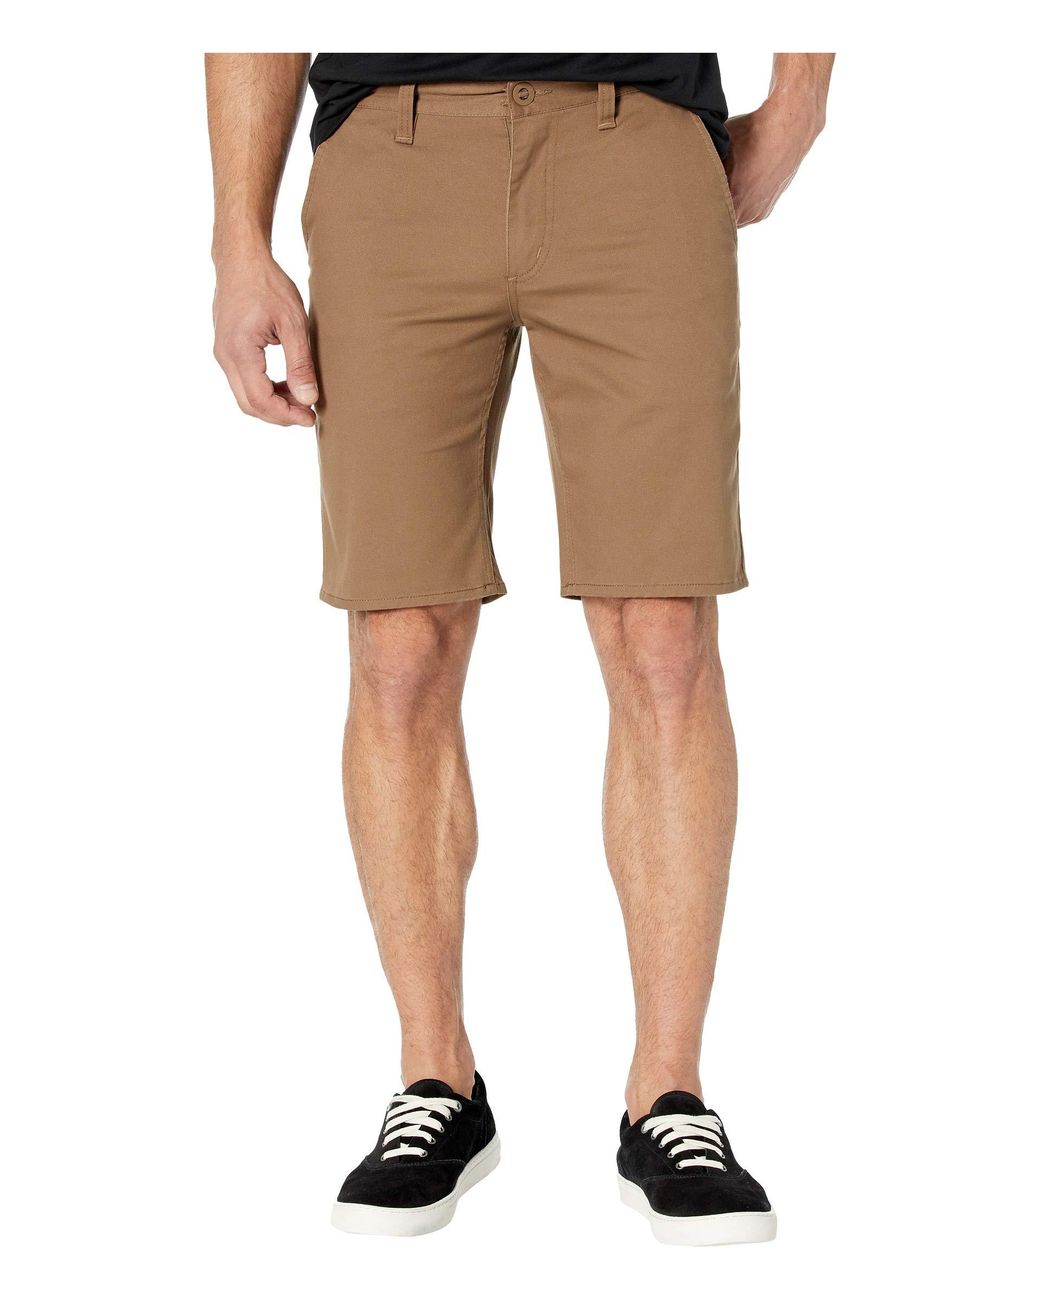 Brixton Cotton Toil Ii Hemmed Shorts in Khaki (Natural) for Men - Lyst